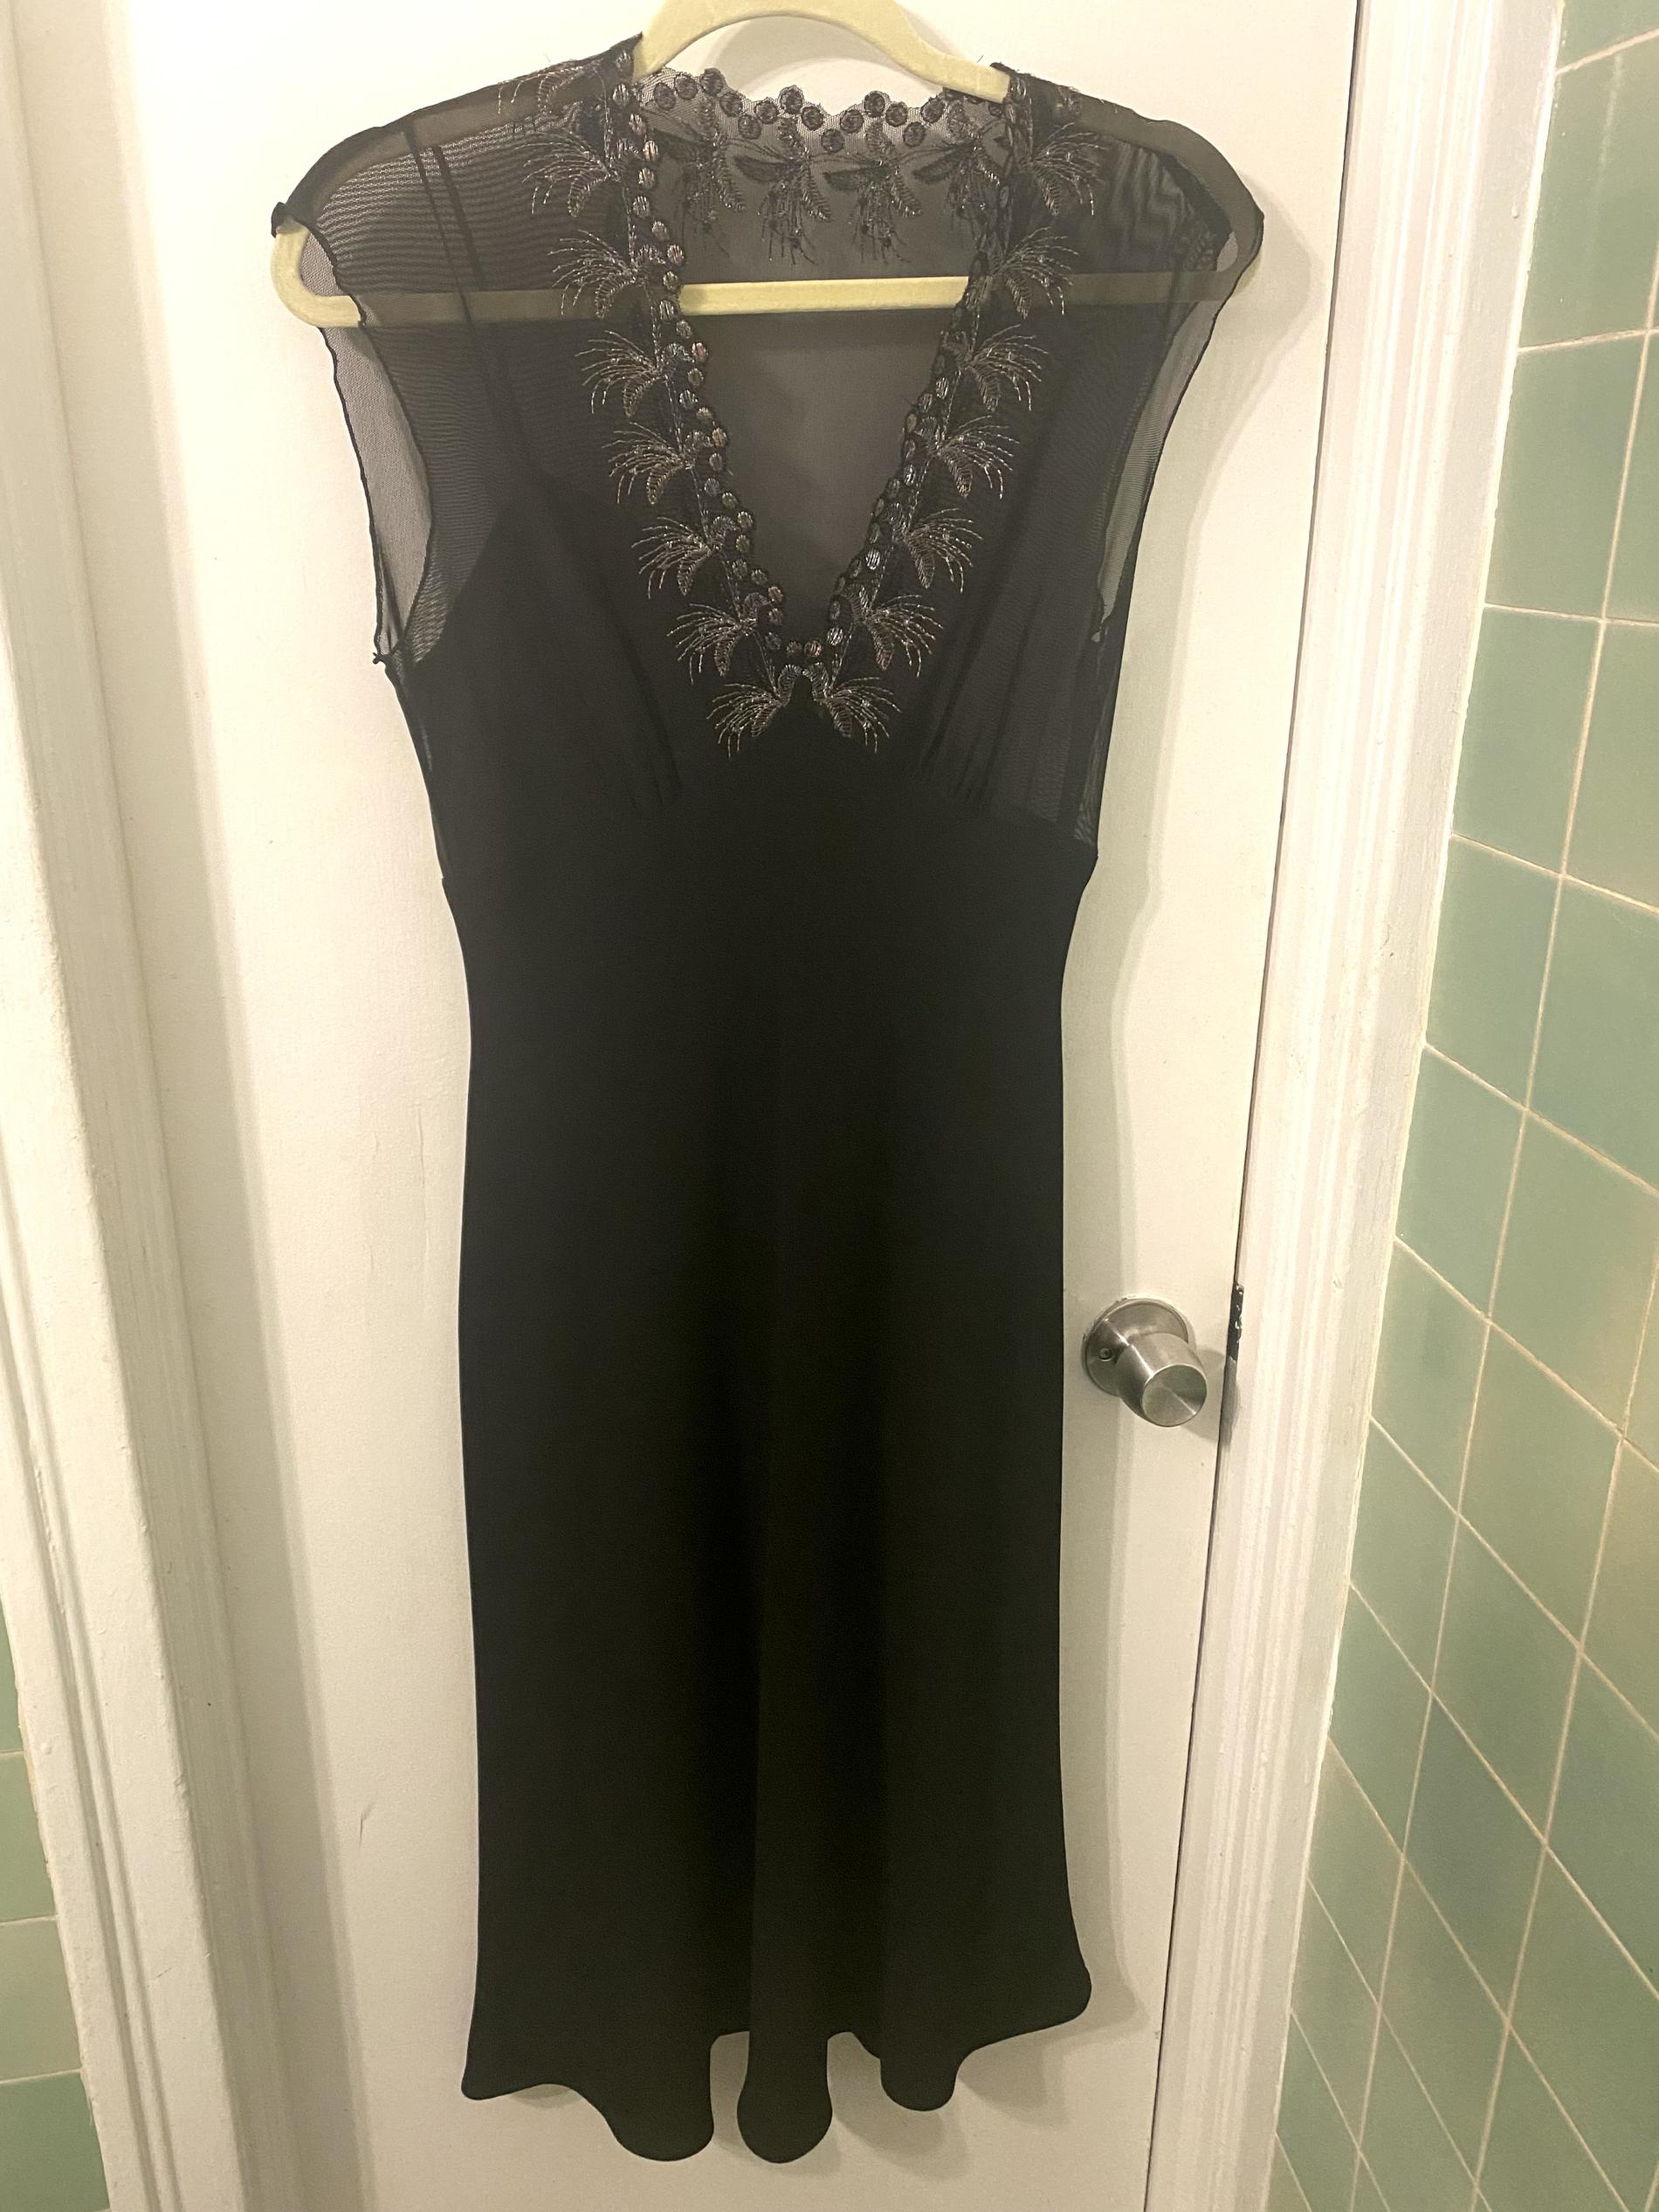 Jones of New York Size 8 Sheer Black Cocktail Dress on Queenly